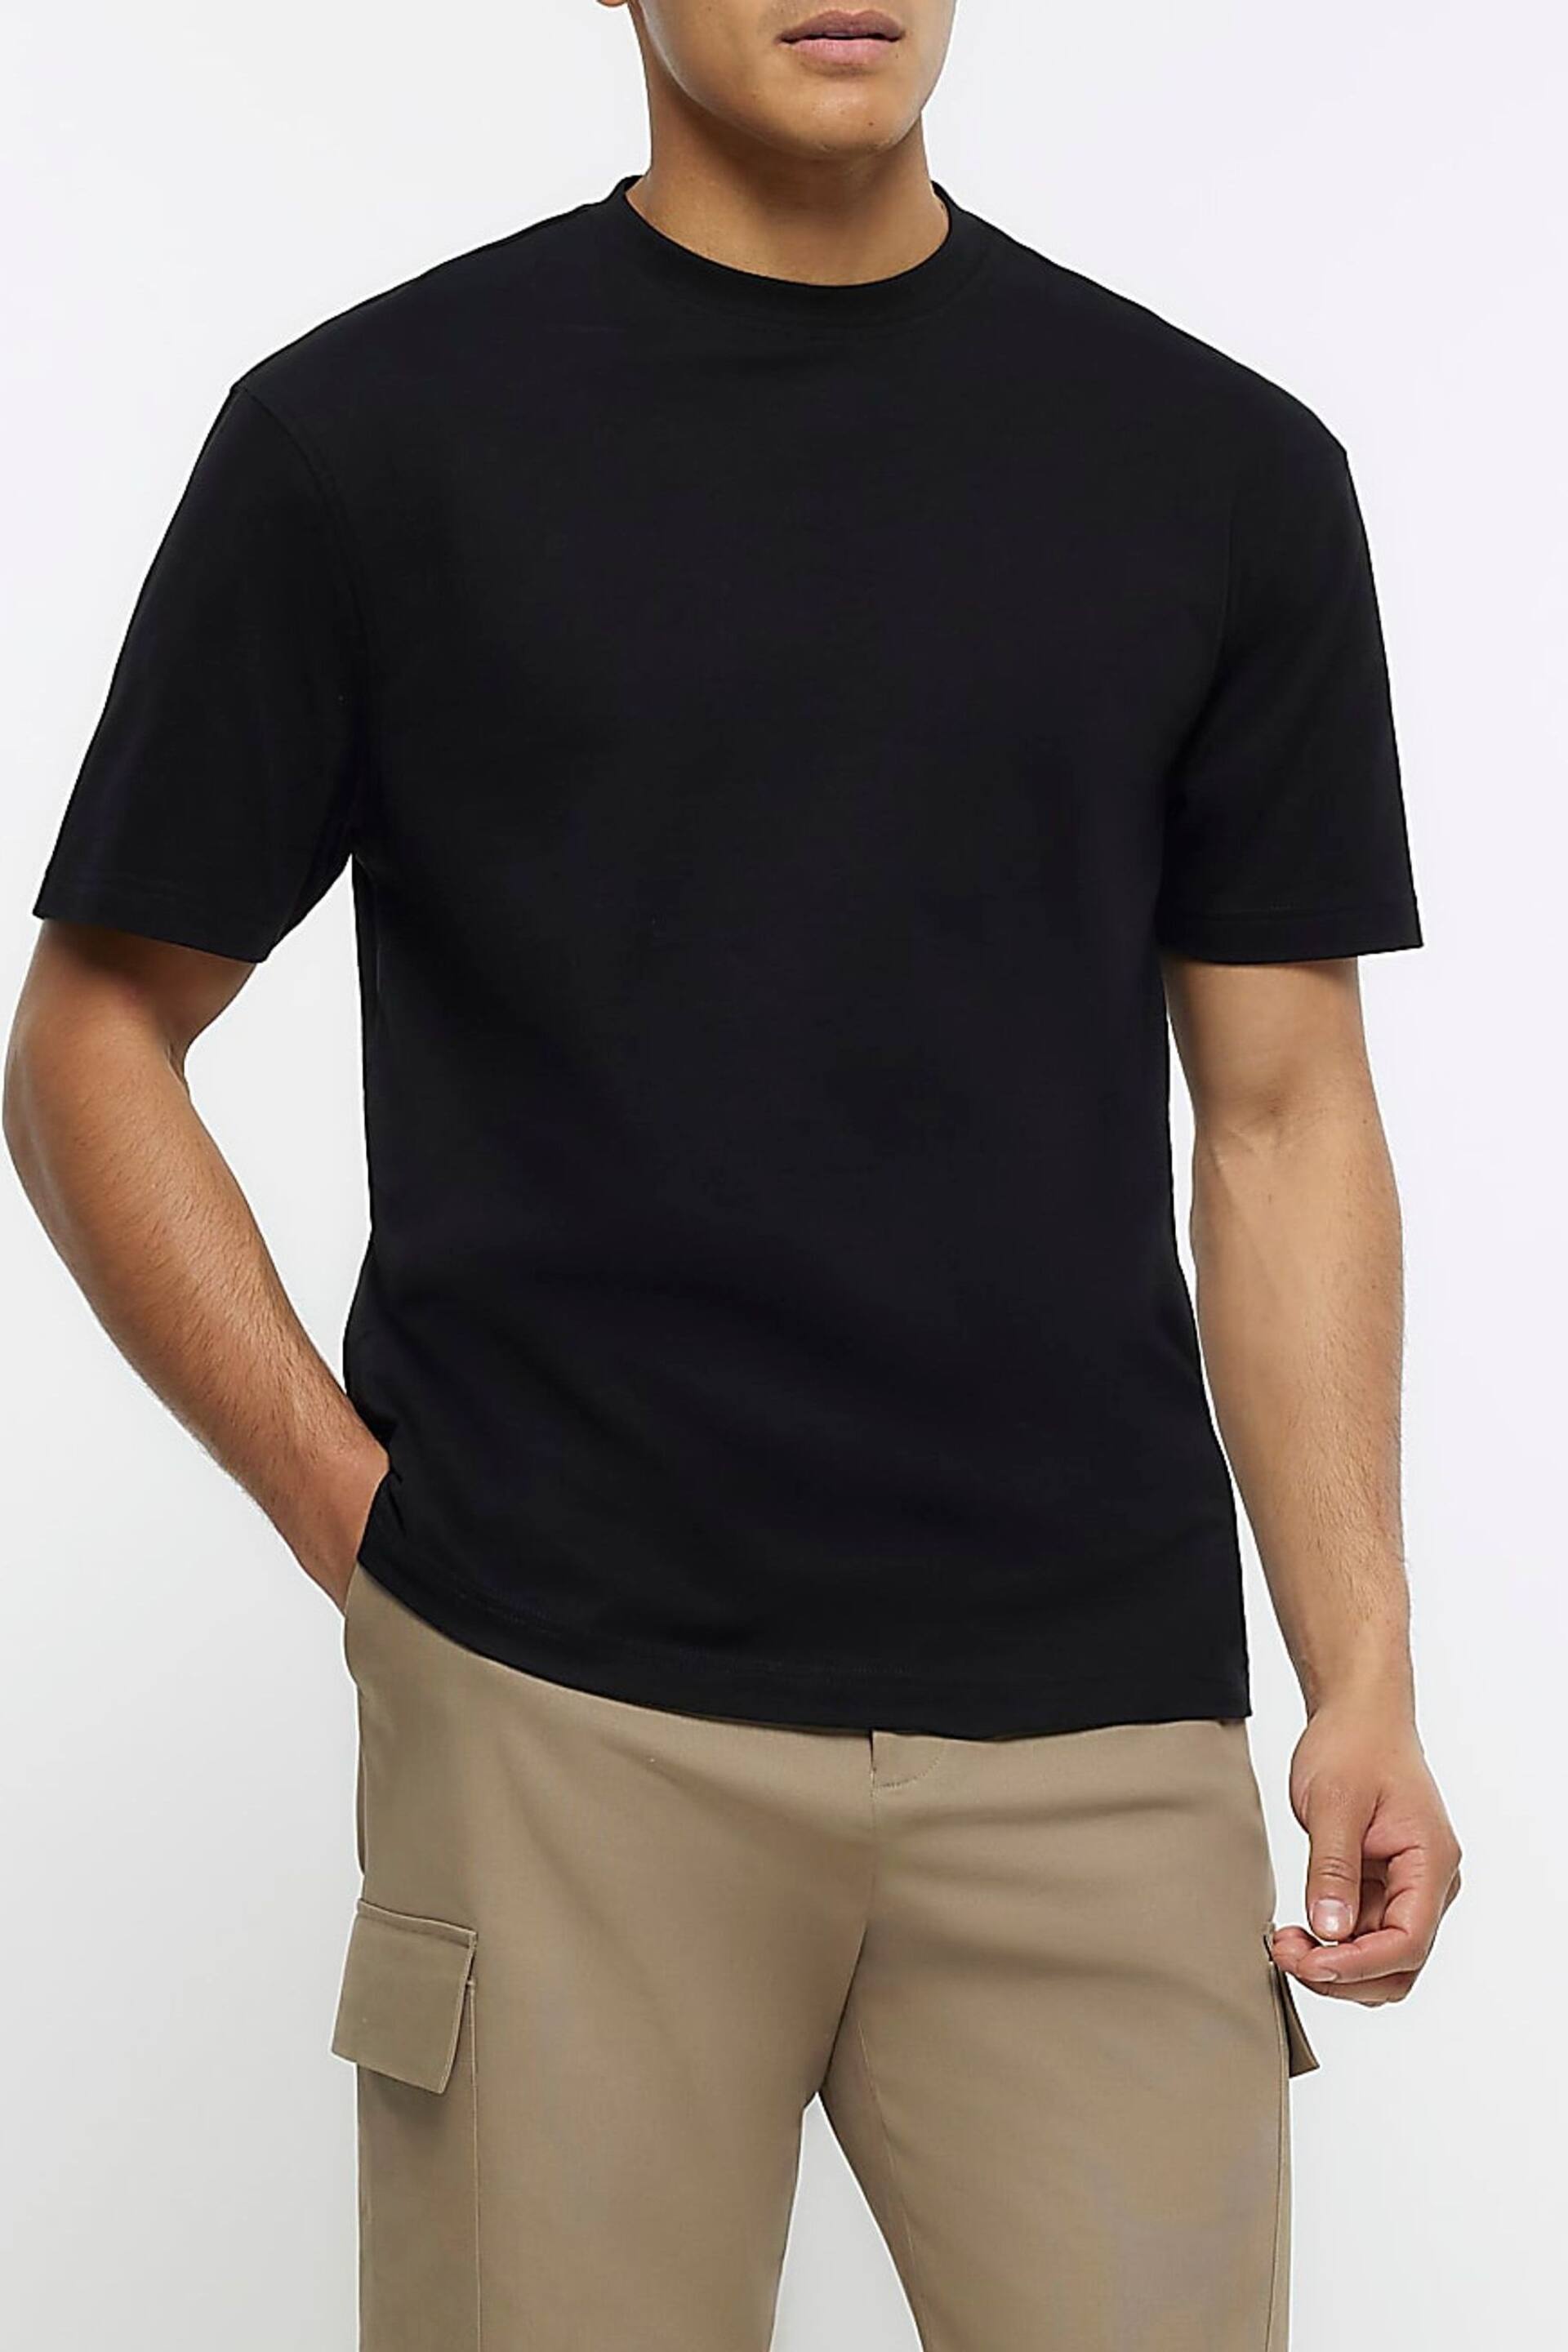 River Island Black Regular Fit T-Shirt - Image 2 of 6